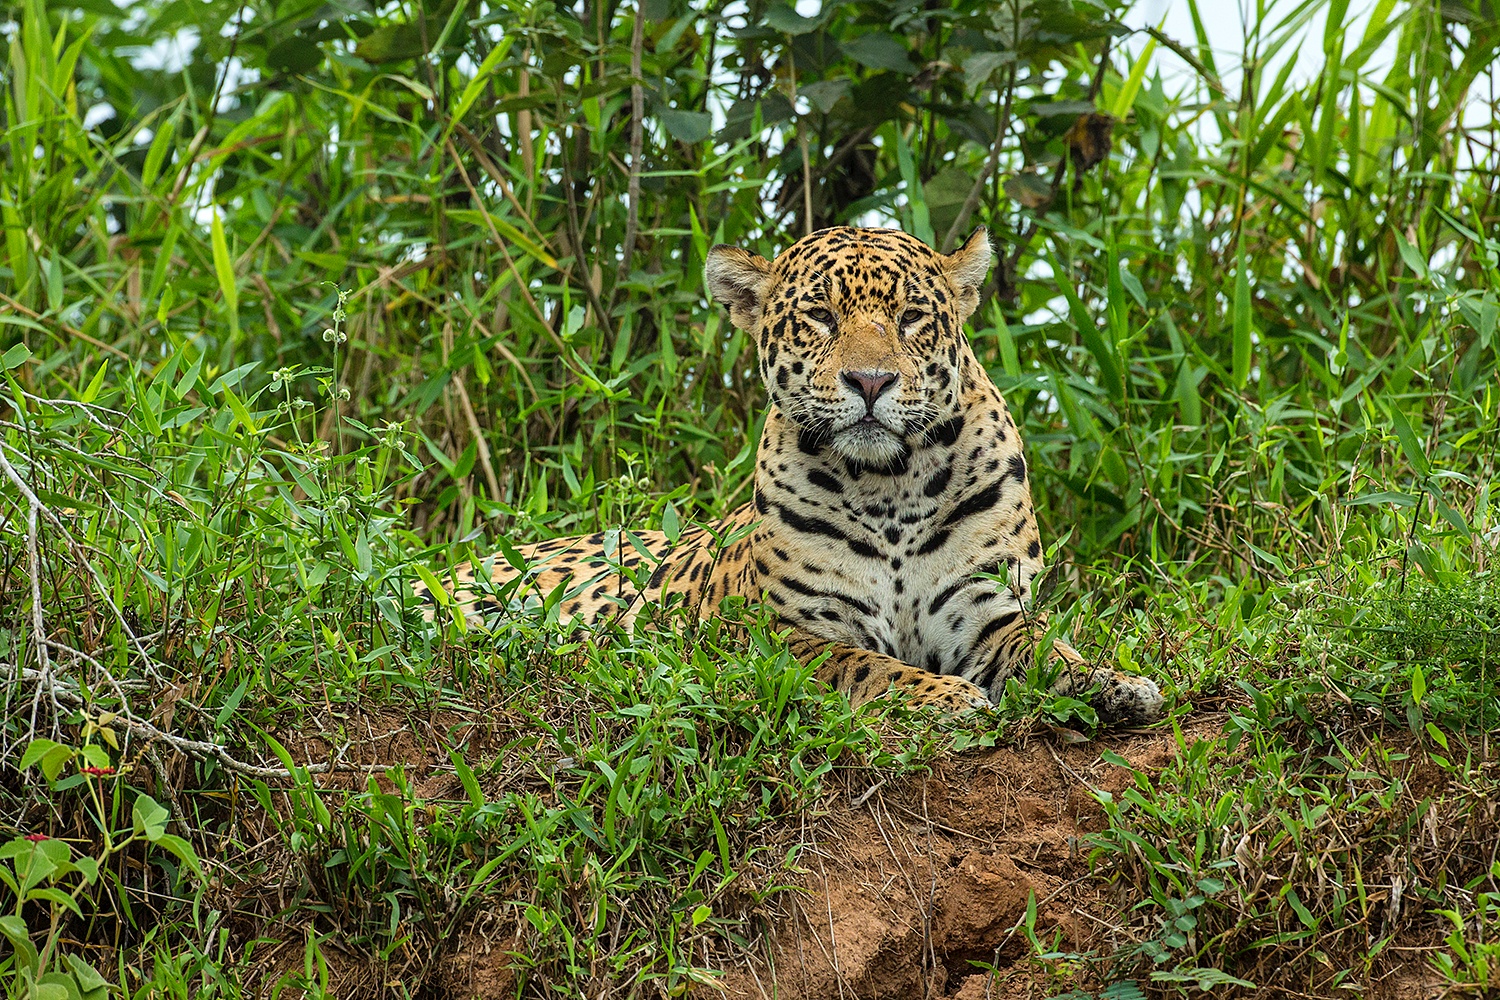 Pantanal - Jim Zuckerman photography & photo tours